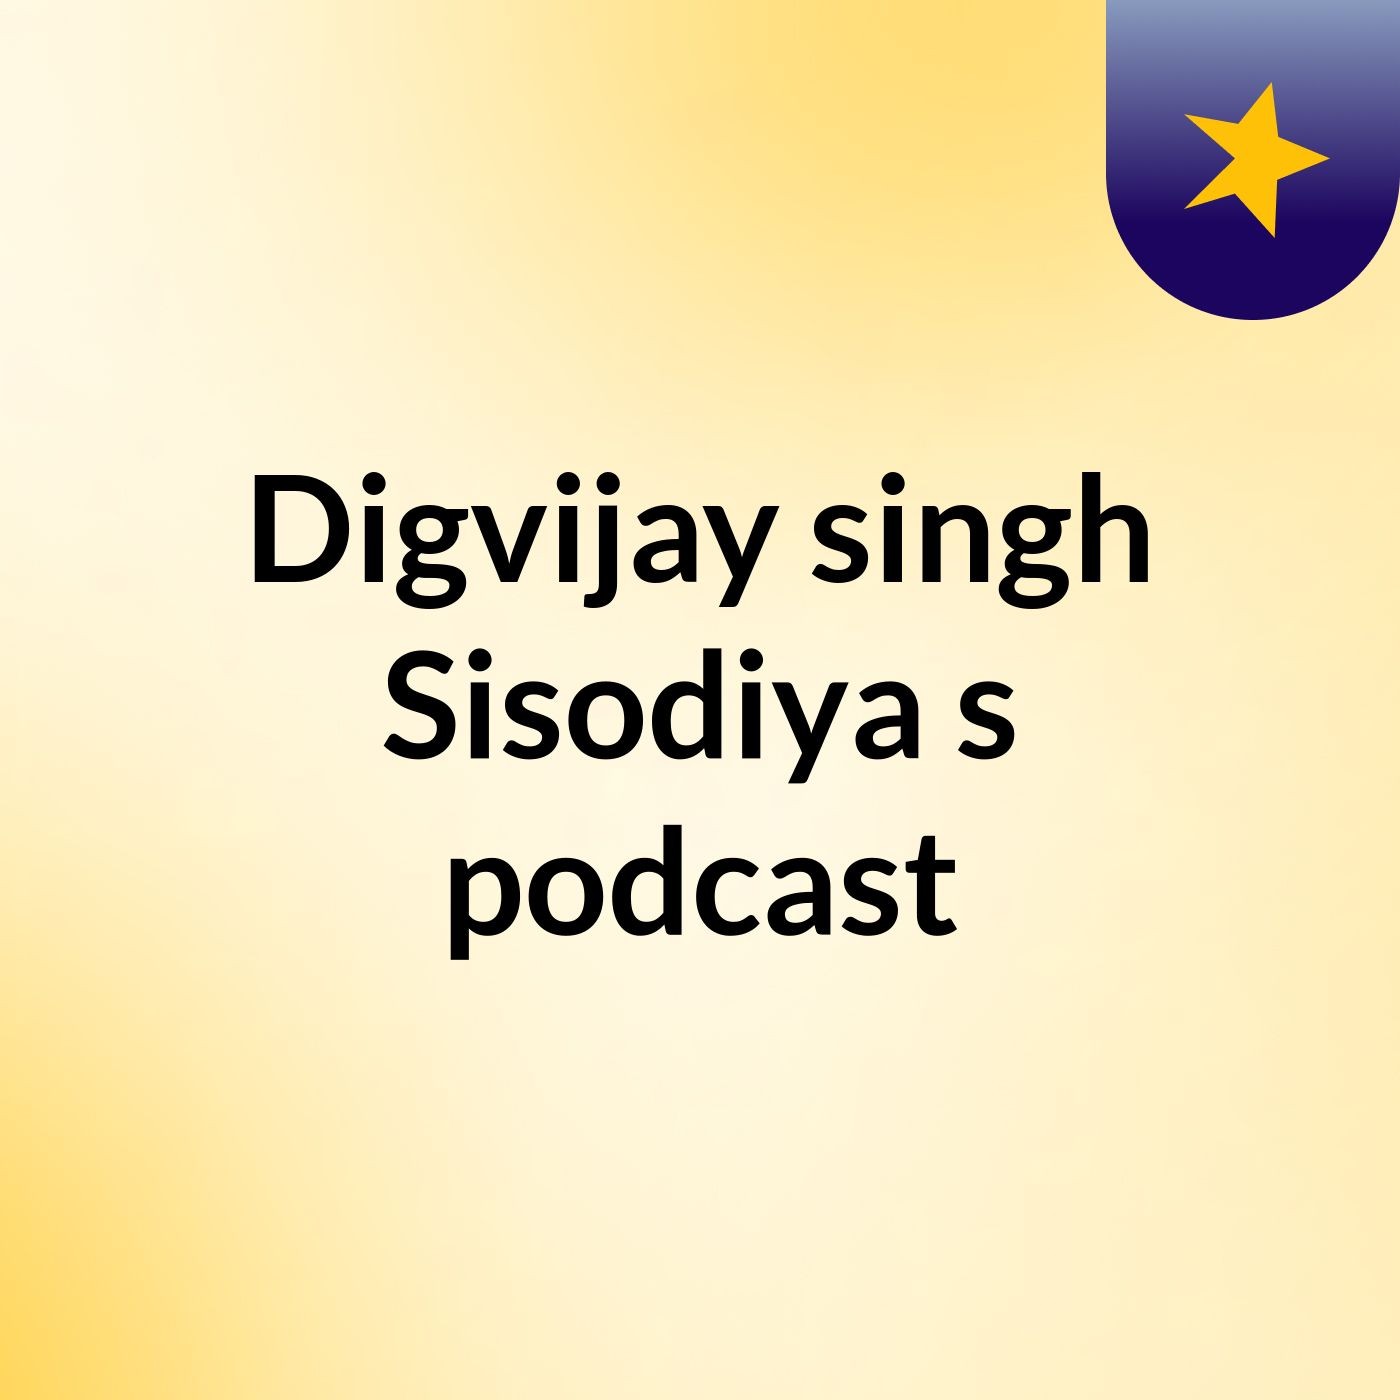 Episode 7 - Digvijay singh Sisodiya's podcast